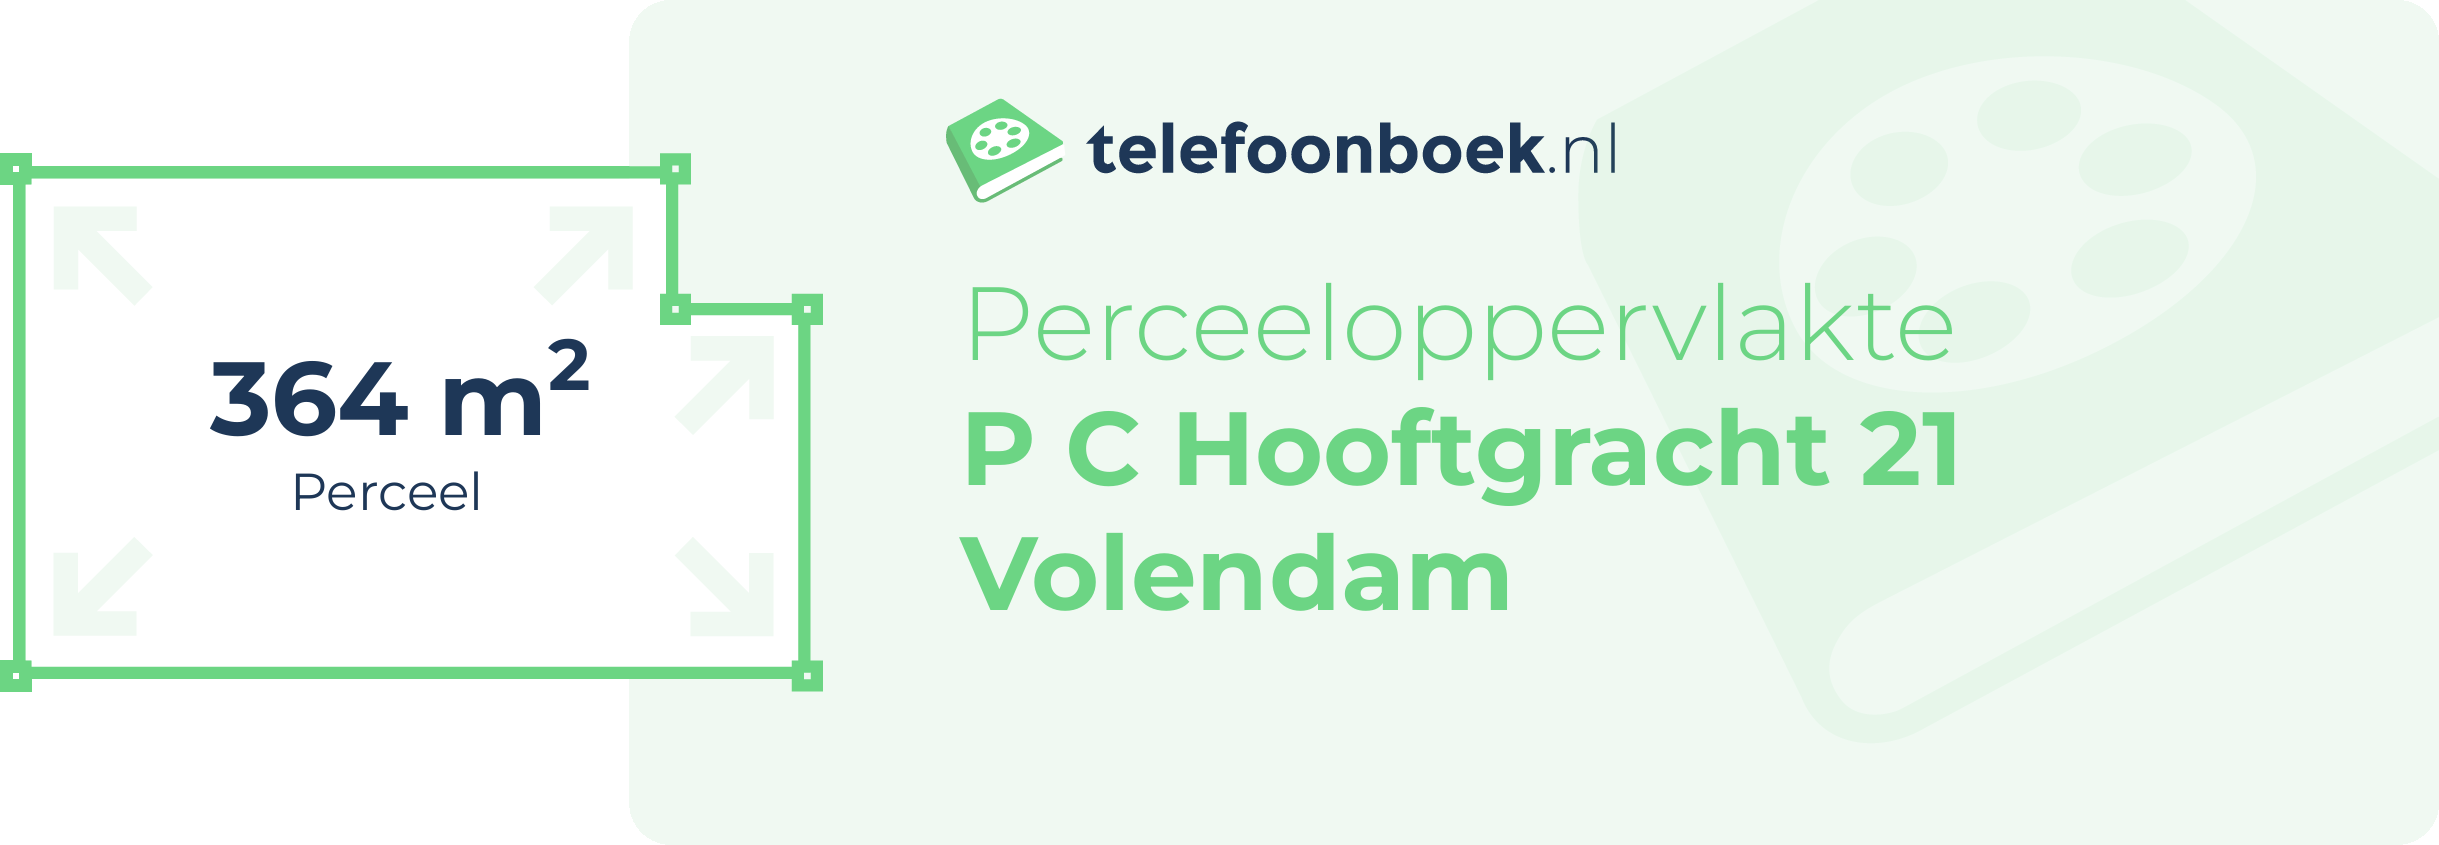 Perceeloppervlakte P C Hooftgracht 21 Volendam